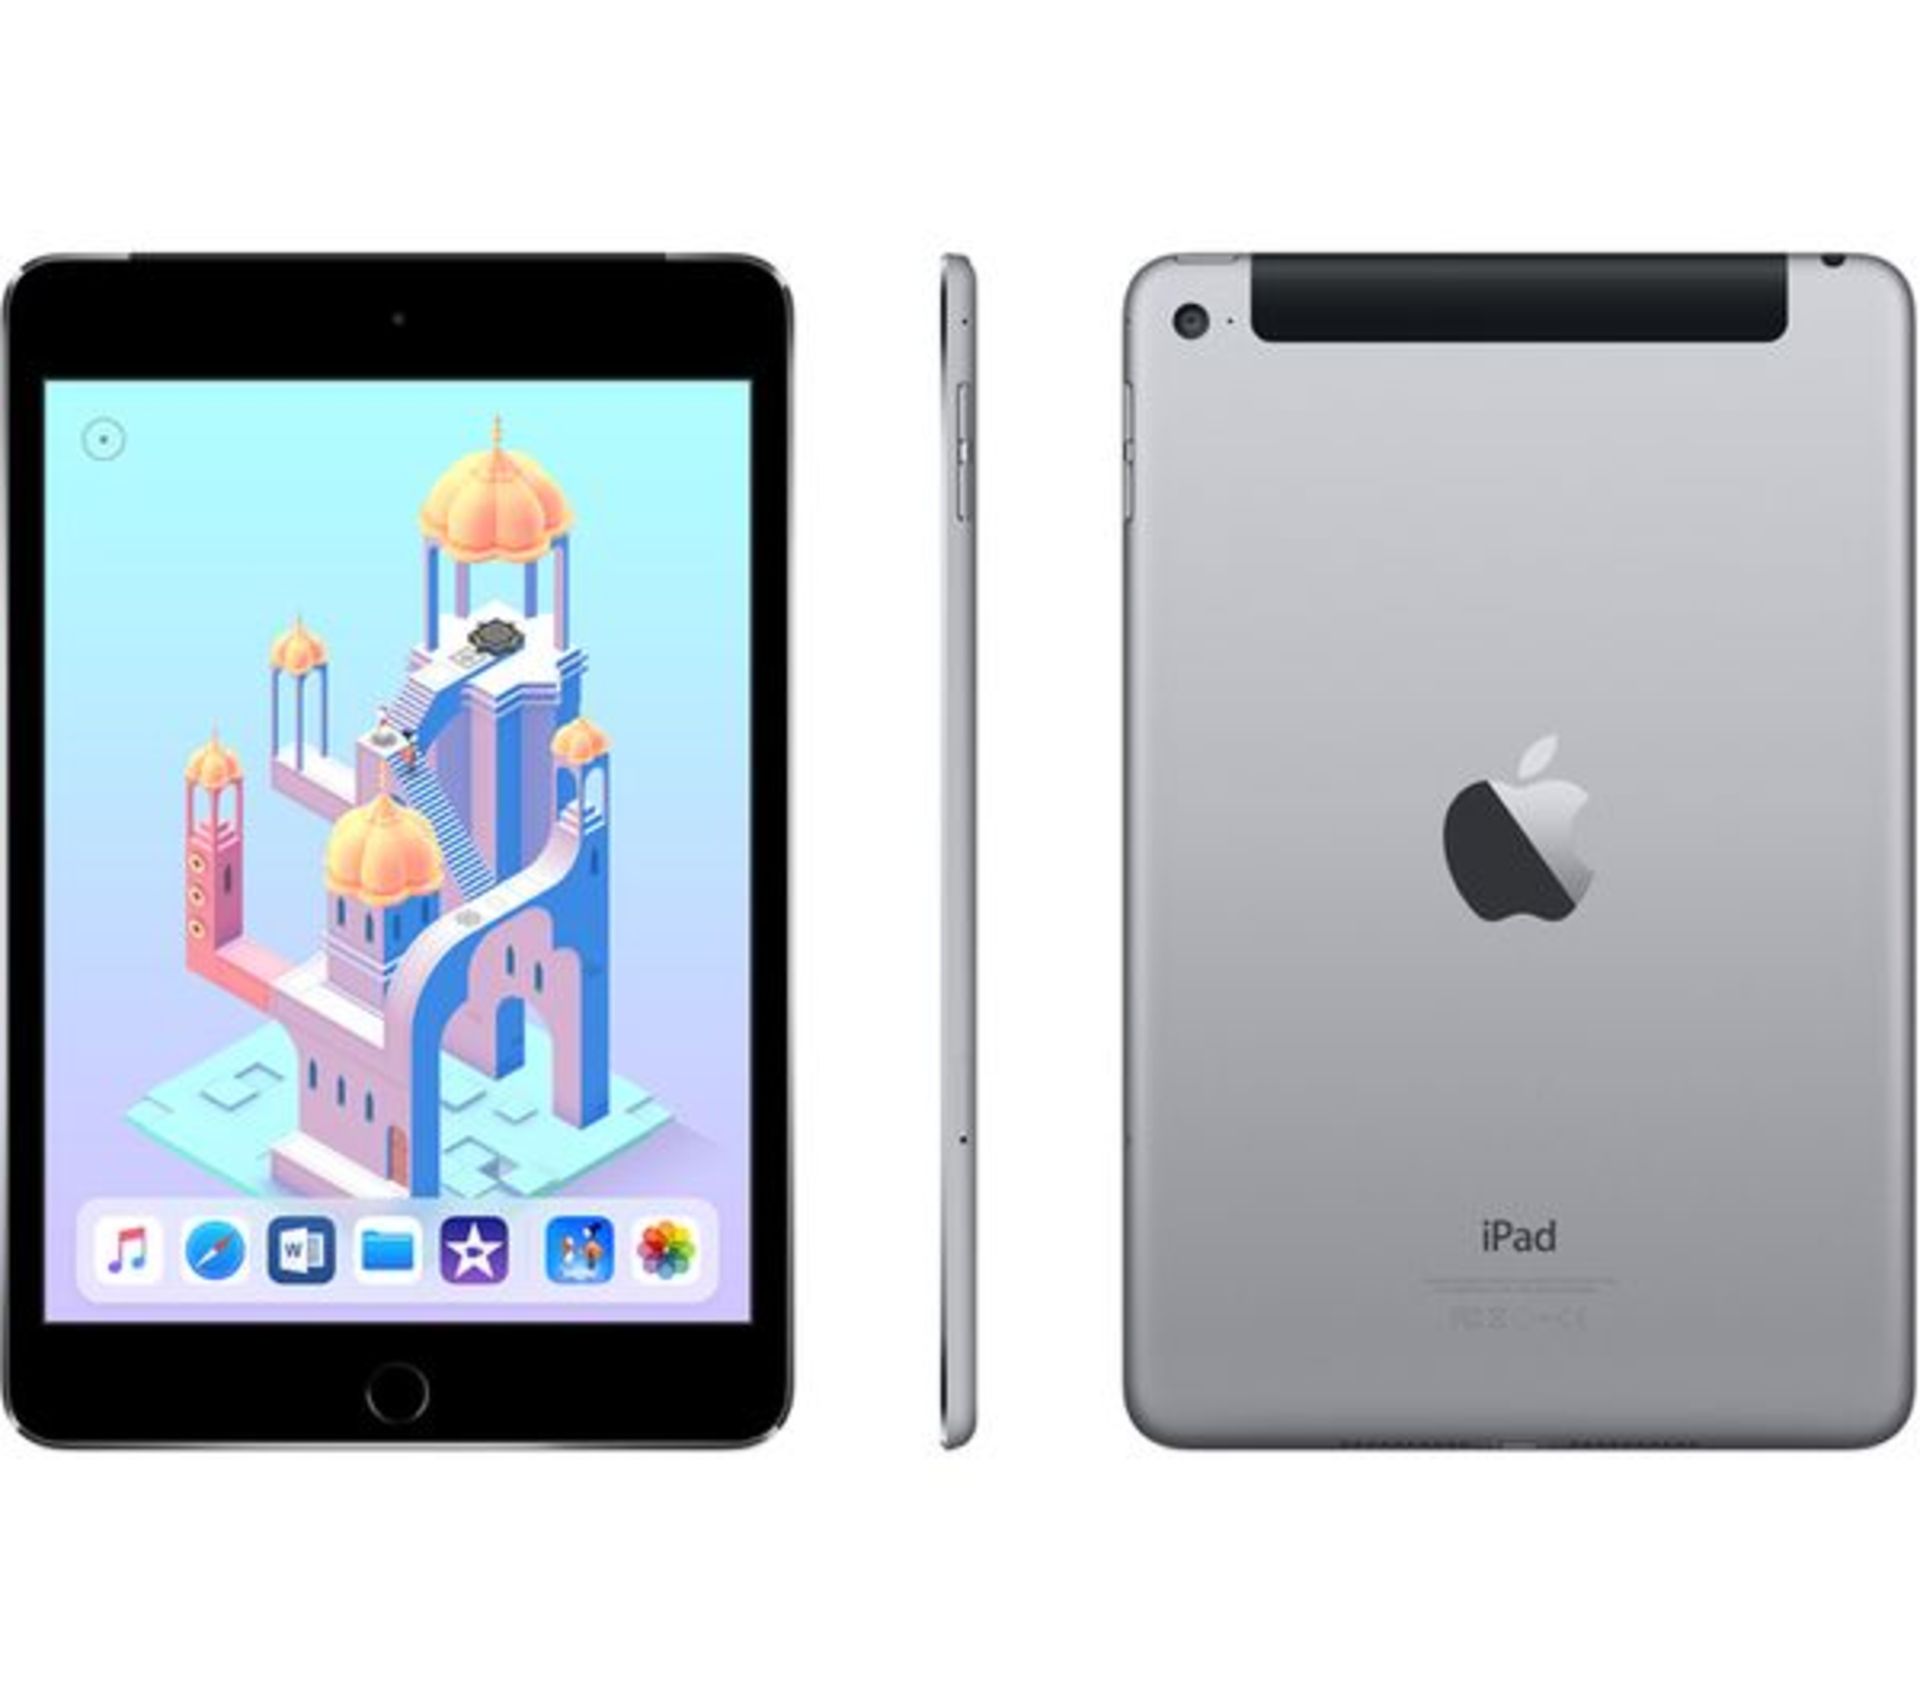 1 x Apple iPad Mini 4 Cellular - 128gb in Space Grey - Model MK8D2B/A - A8 Processor - 7.9" Screen - Image 3 of 4